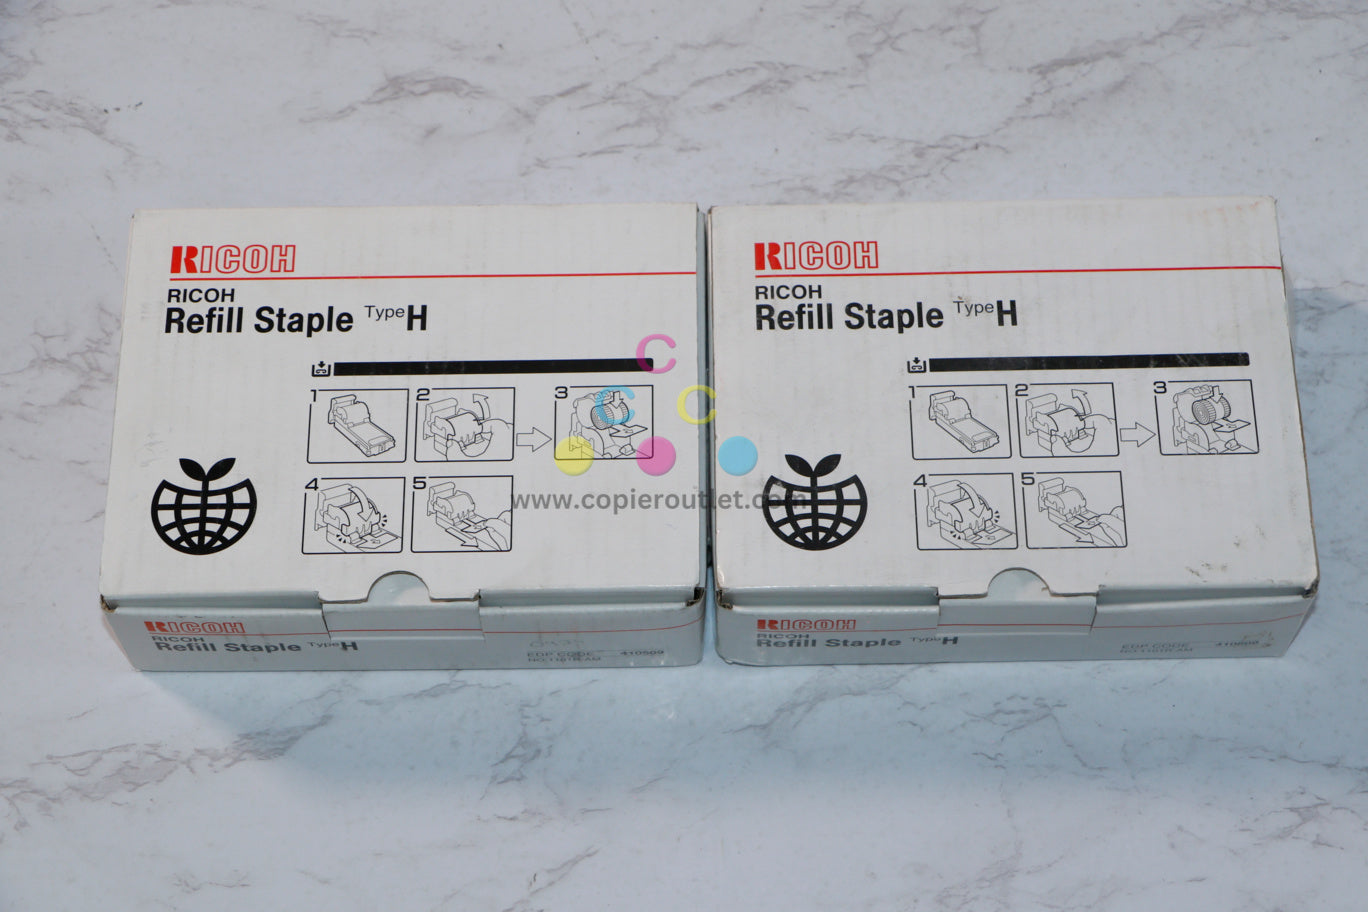 2 New OEM Ricoh LD260,LD270,LD280 Refill Staples Cartridge Type H,410509 (5 Rolls/Box)